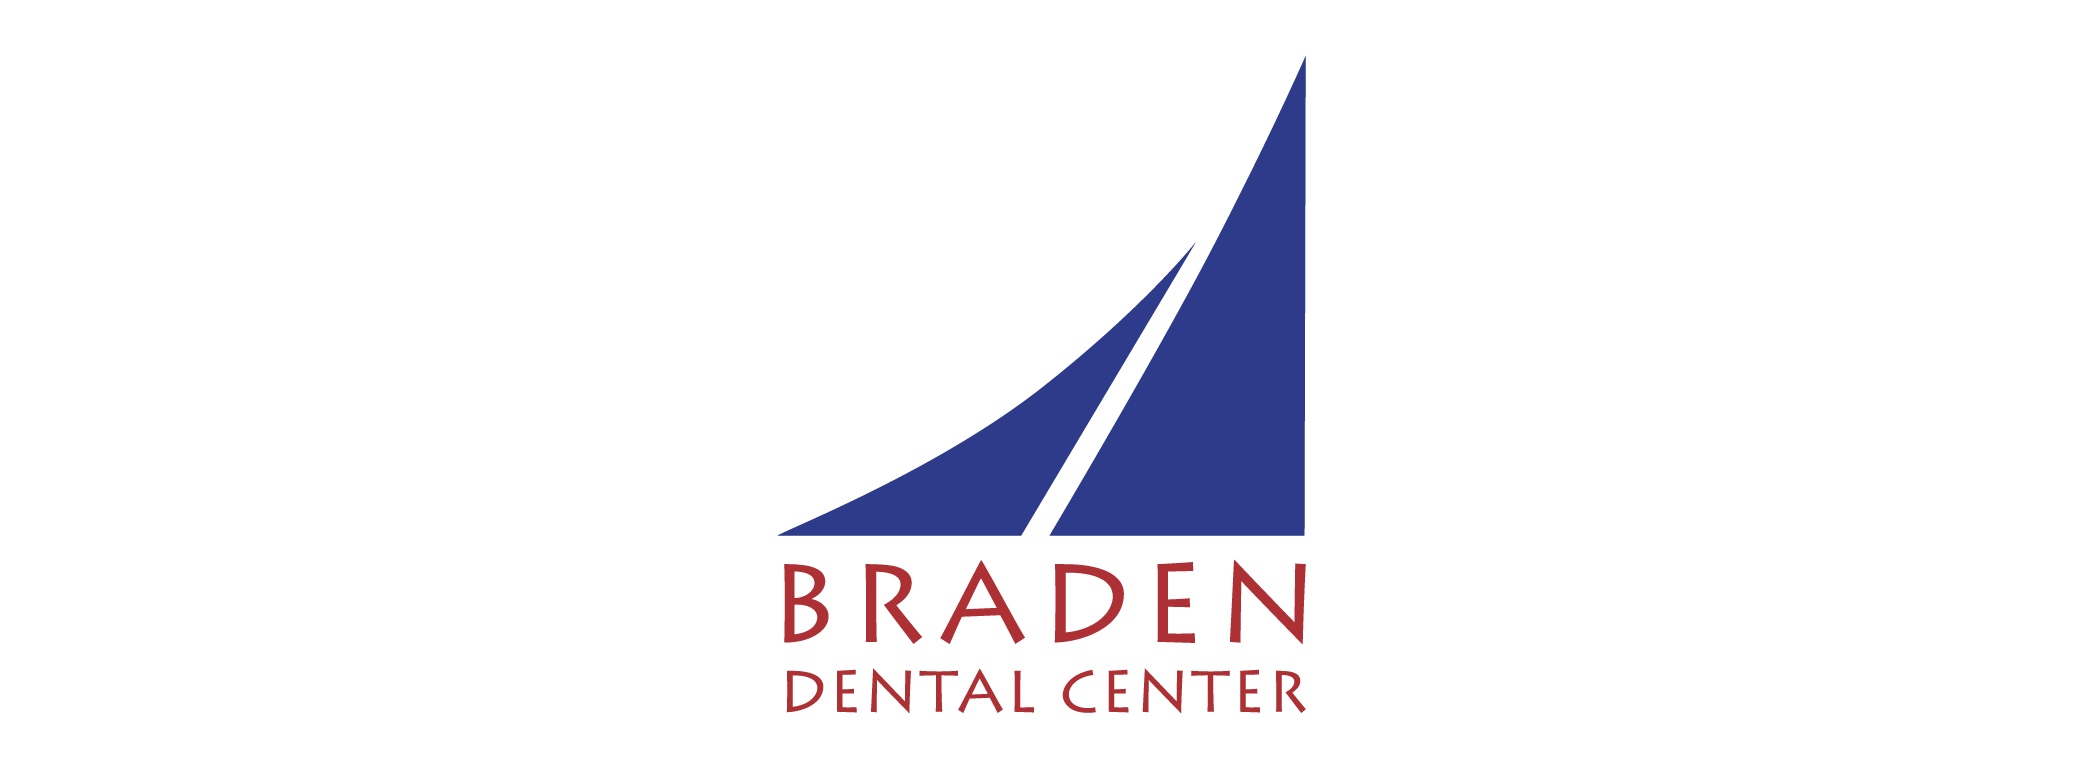 Branden_Dental_Center_Logo_LOGO